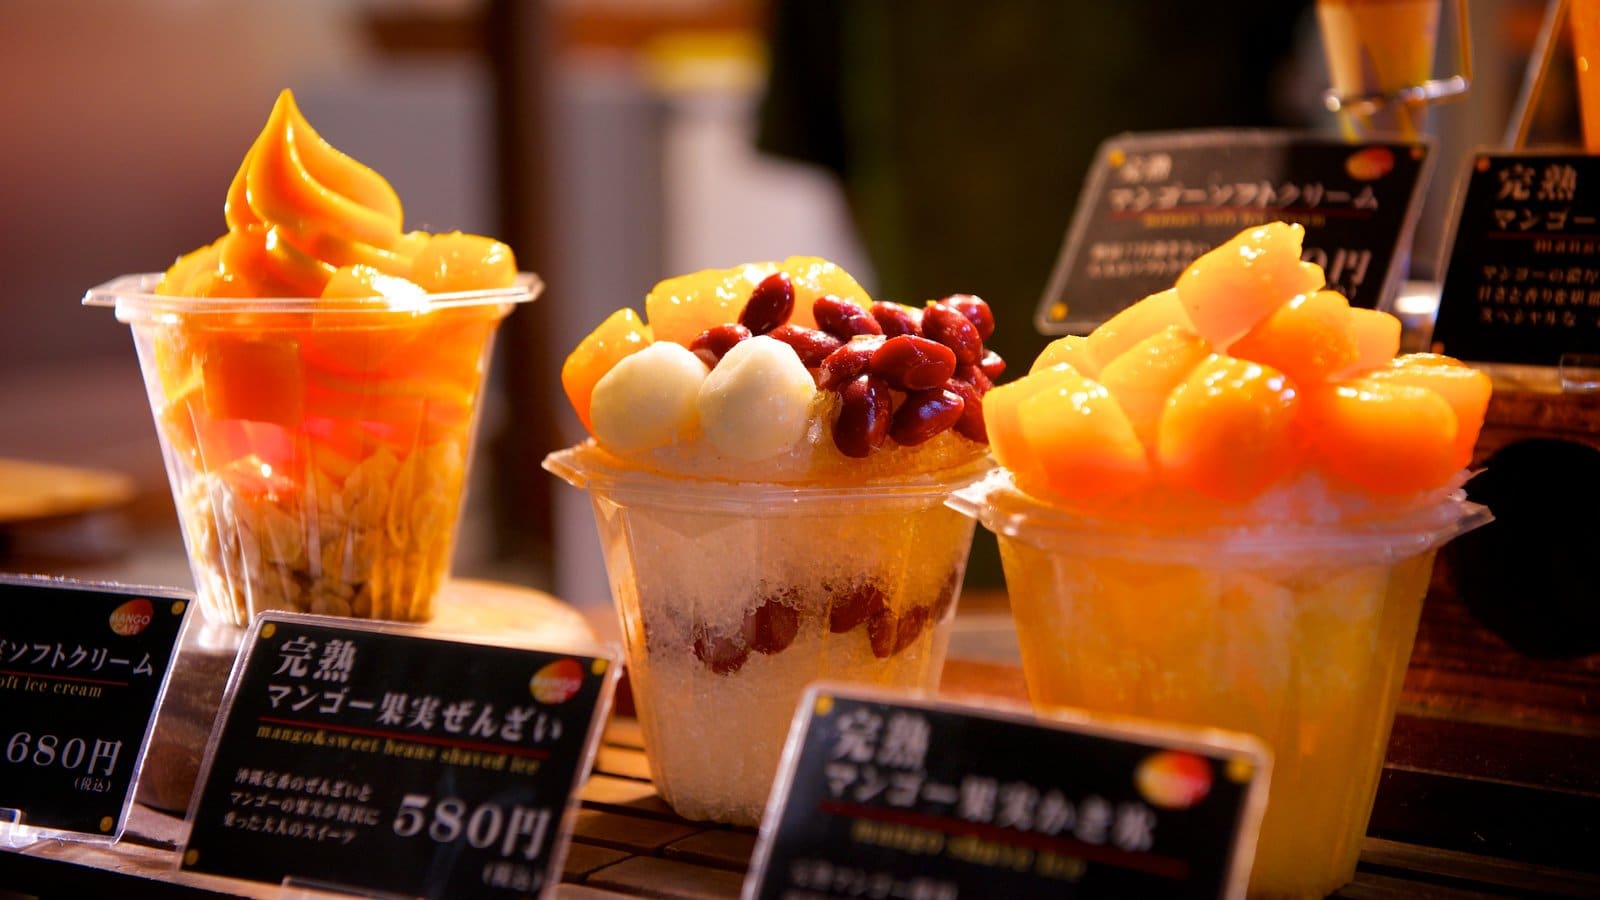 Mango ice cream from Kokusai Street, Okinawa